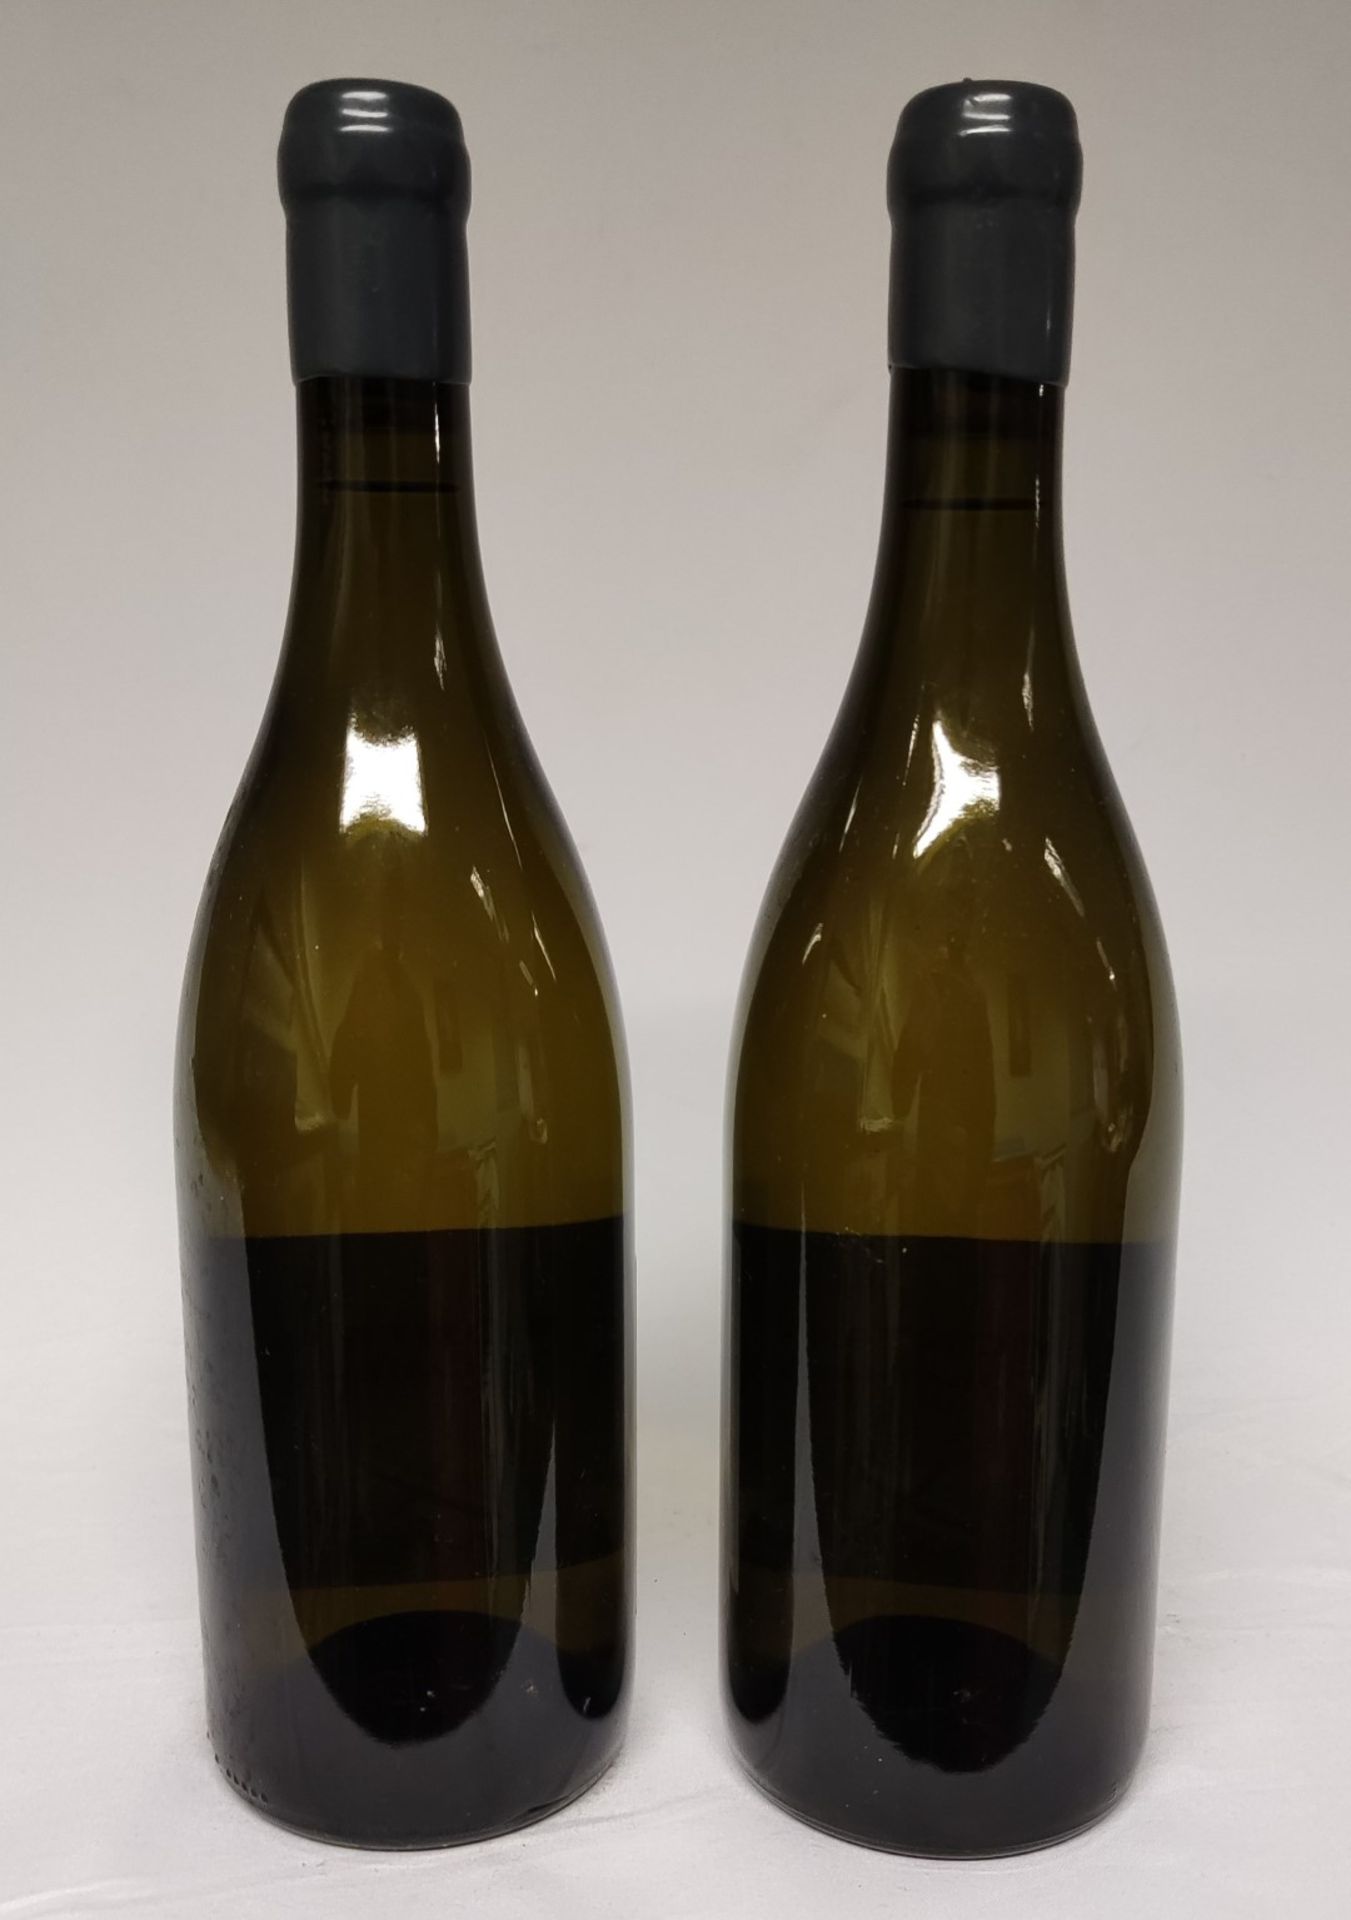 2 x Bottles of 2019 Puligny-Montrachet 1En Cru - Les Folatieres - RRP £400 - Image 6 of 8